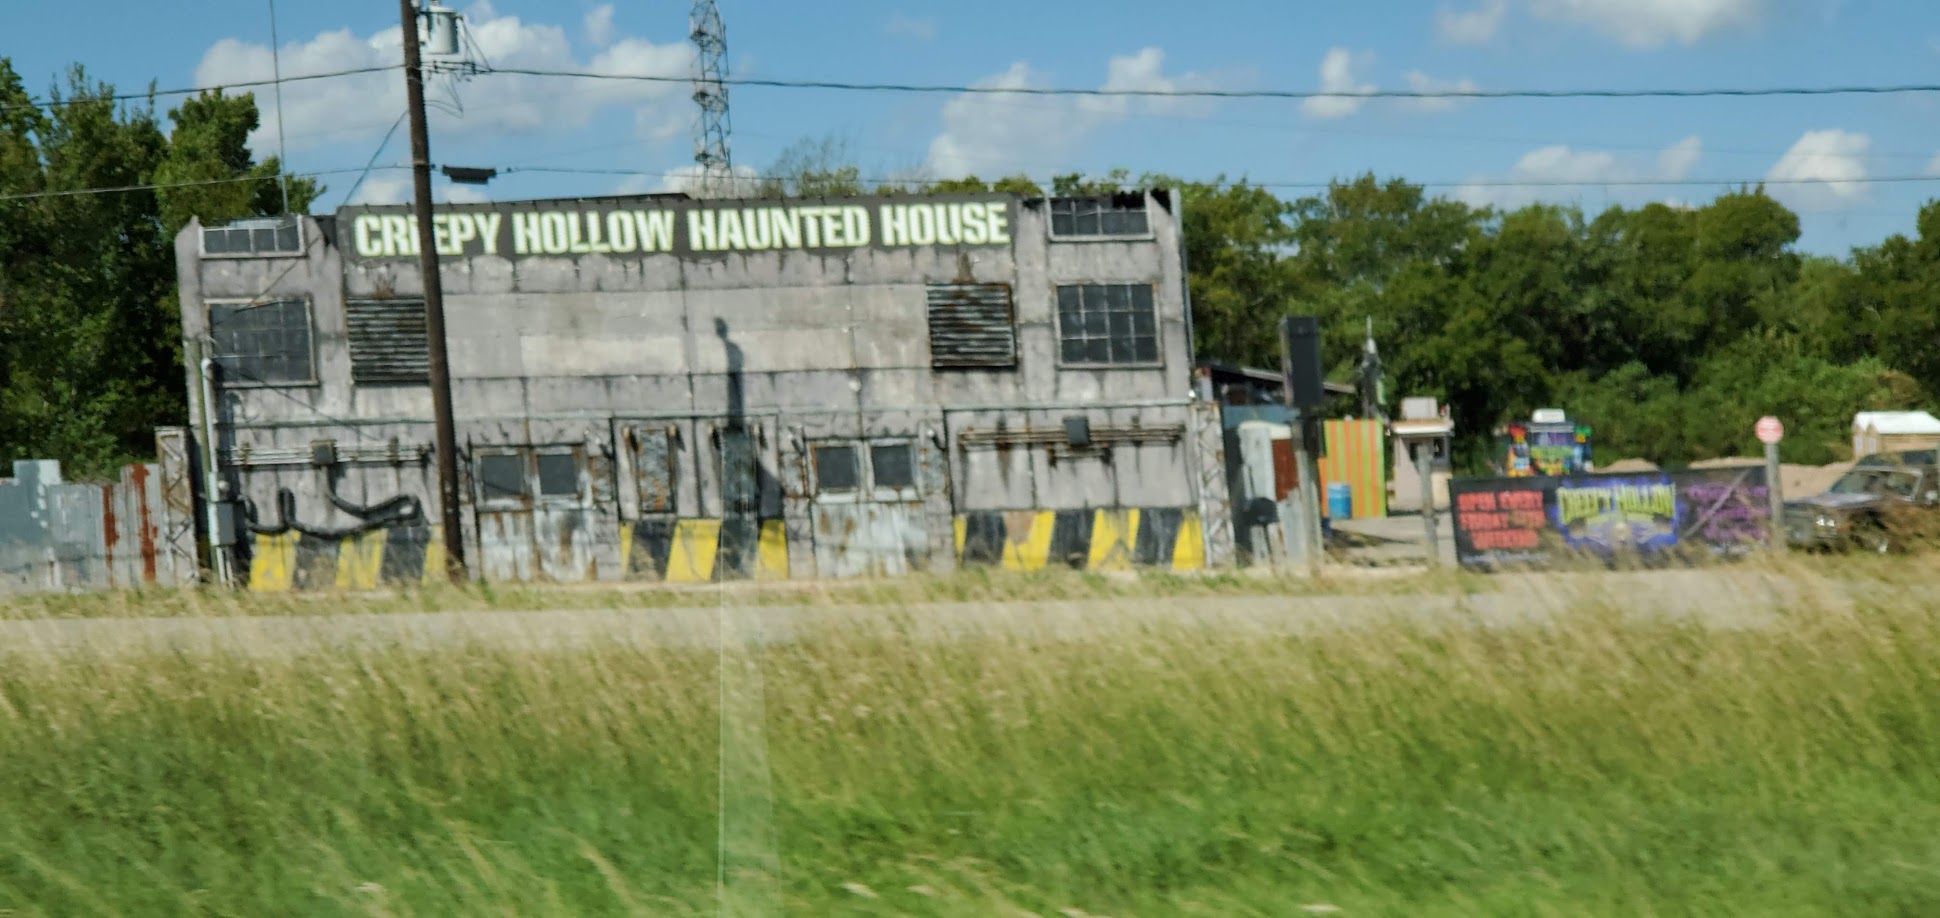 Creepy Hollow Haunted House